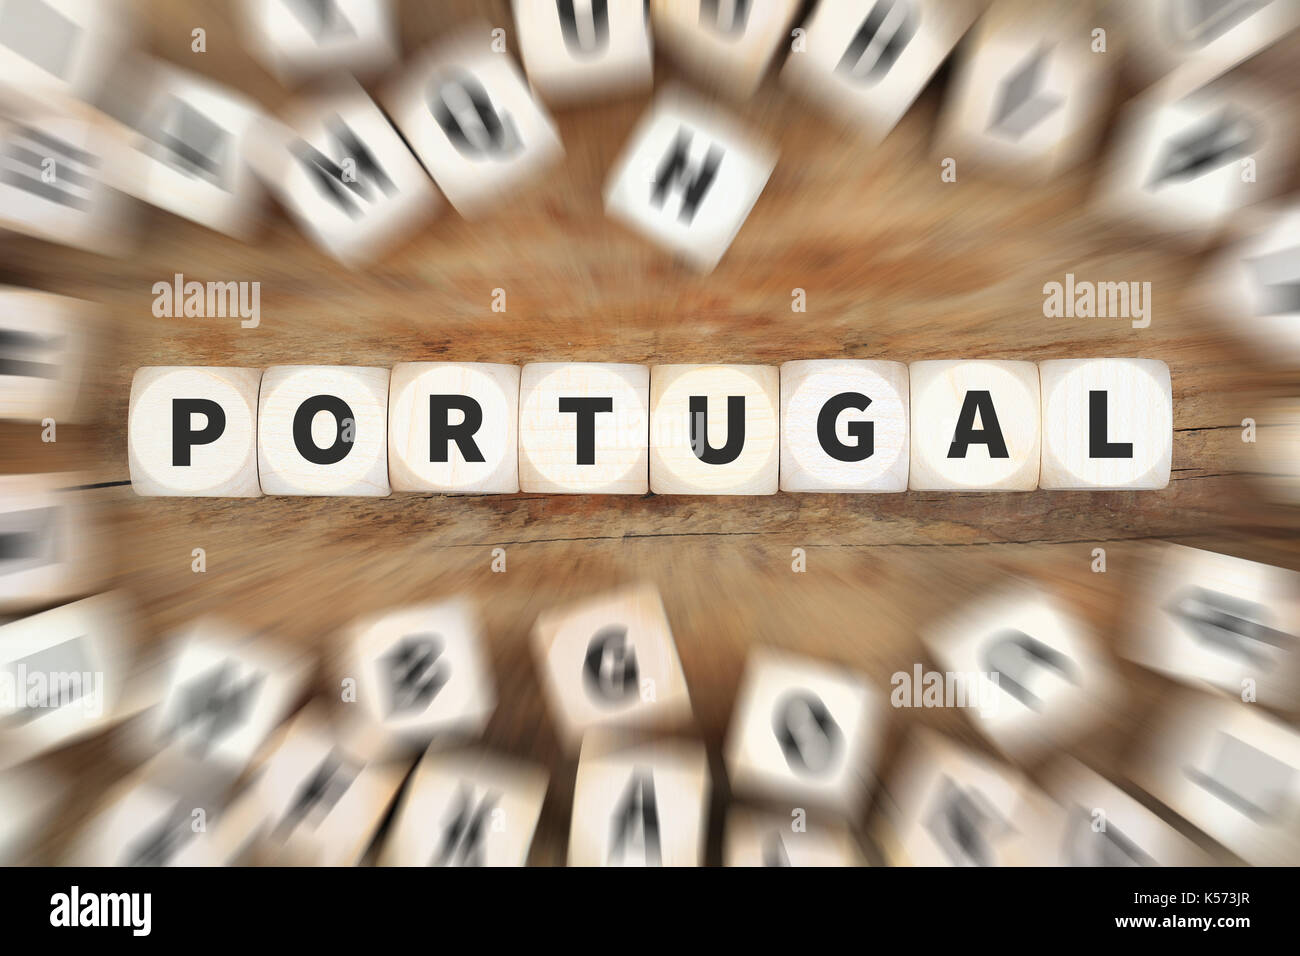 Portugal land Reisen Reisen Würfel Business Konzept Idee Stockfoto